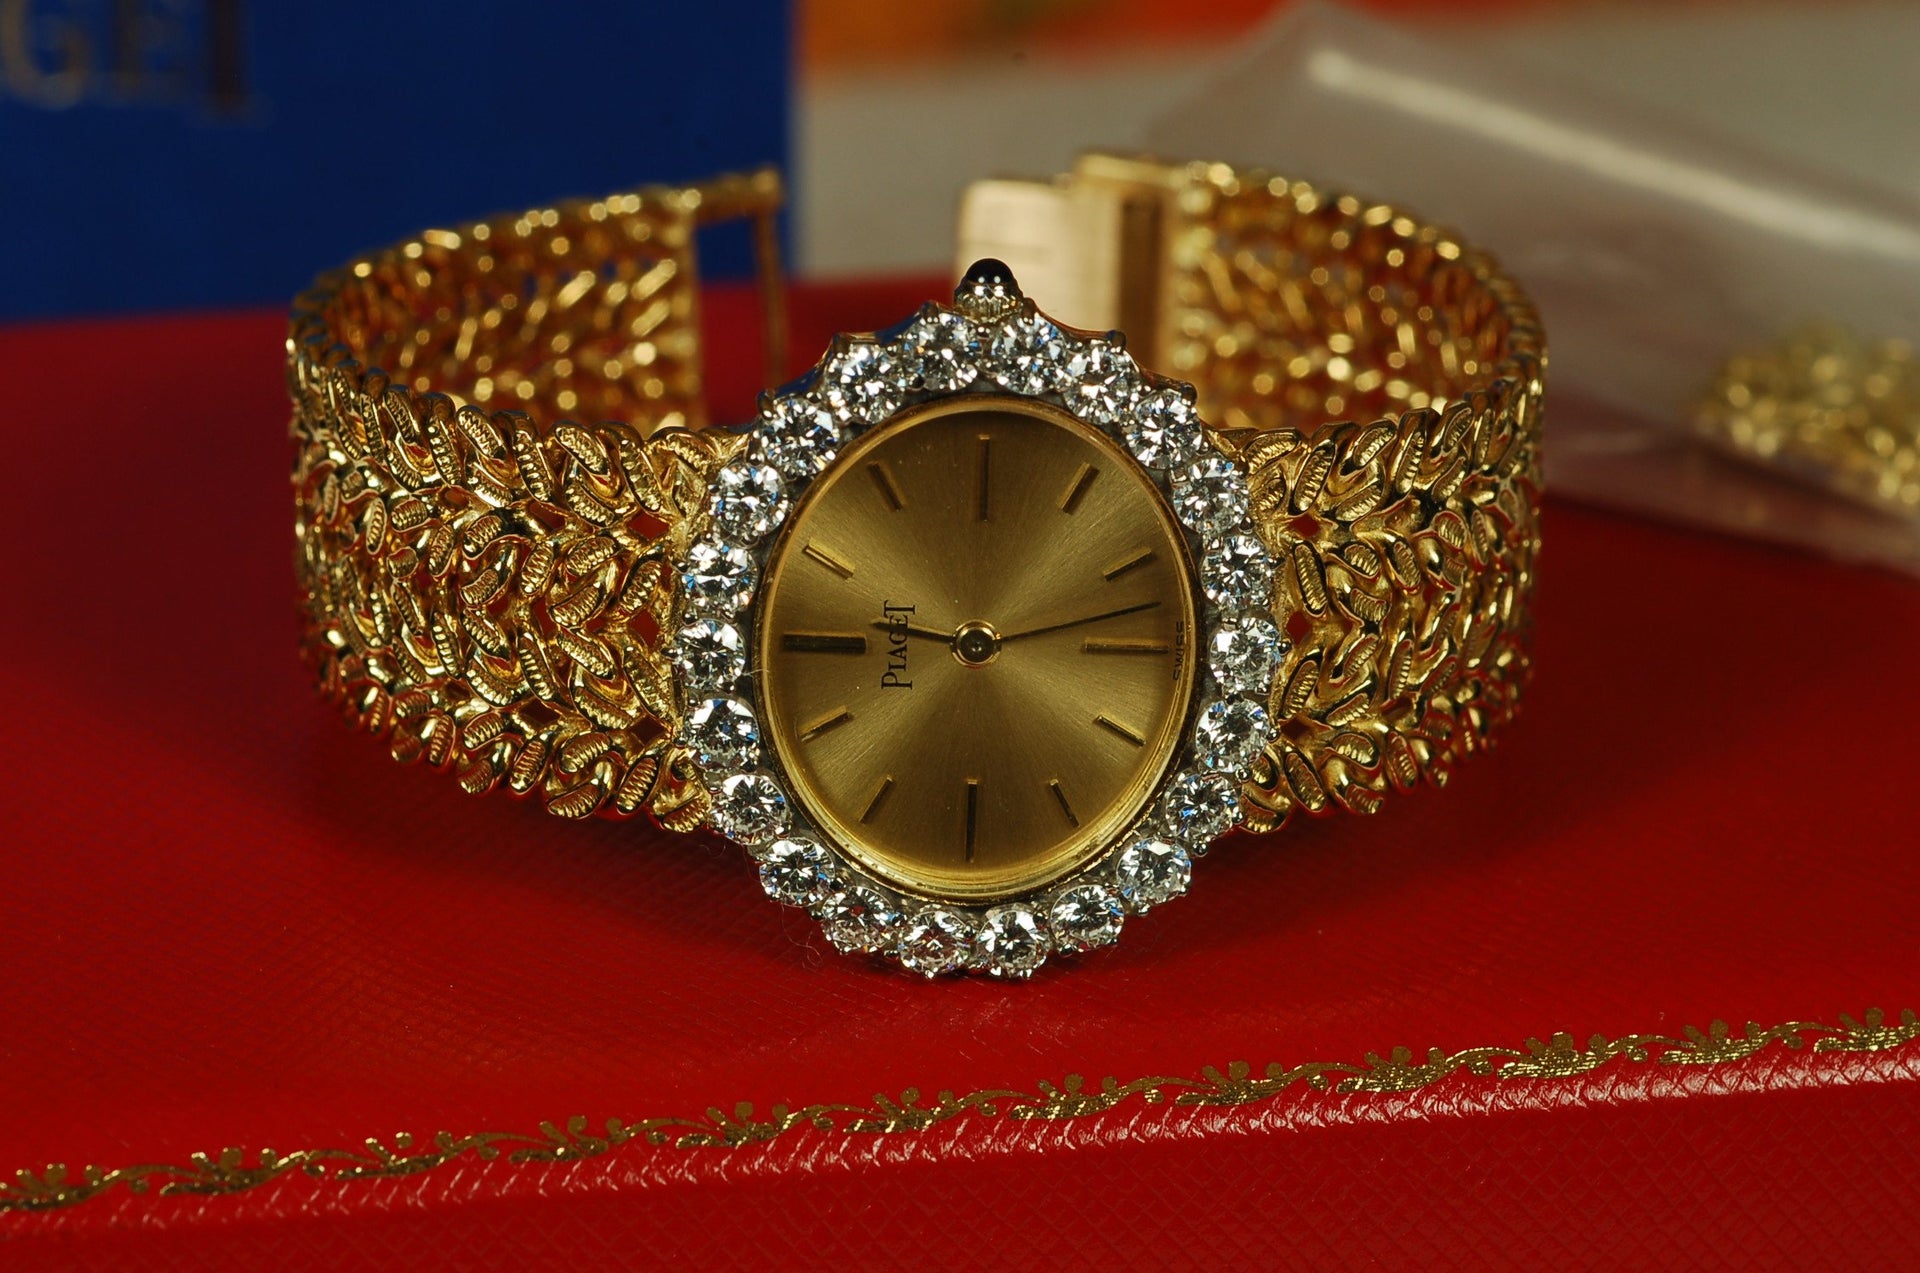 diamond jewelry watches